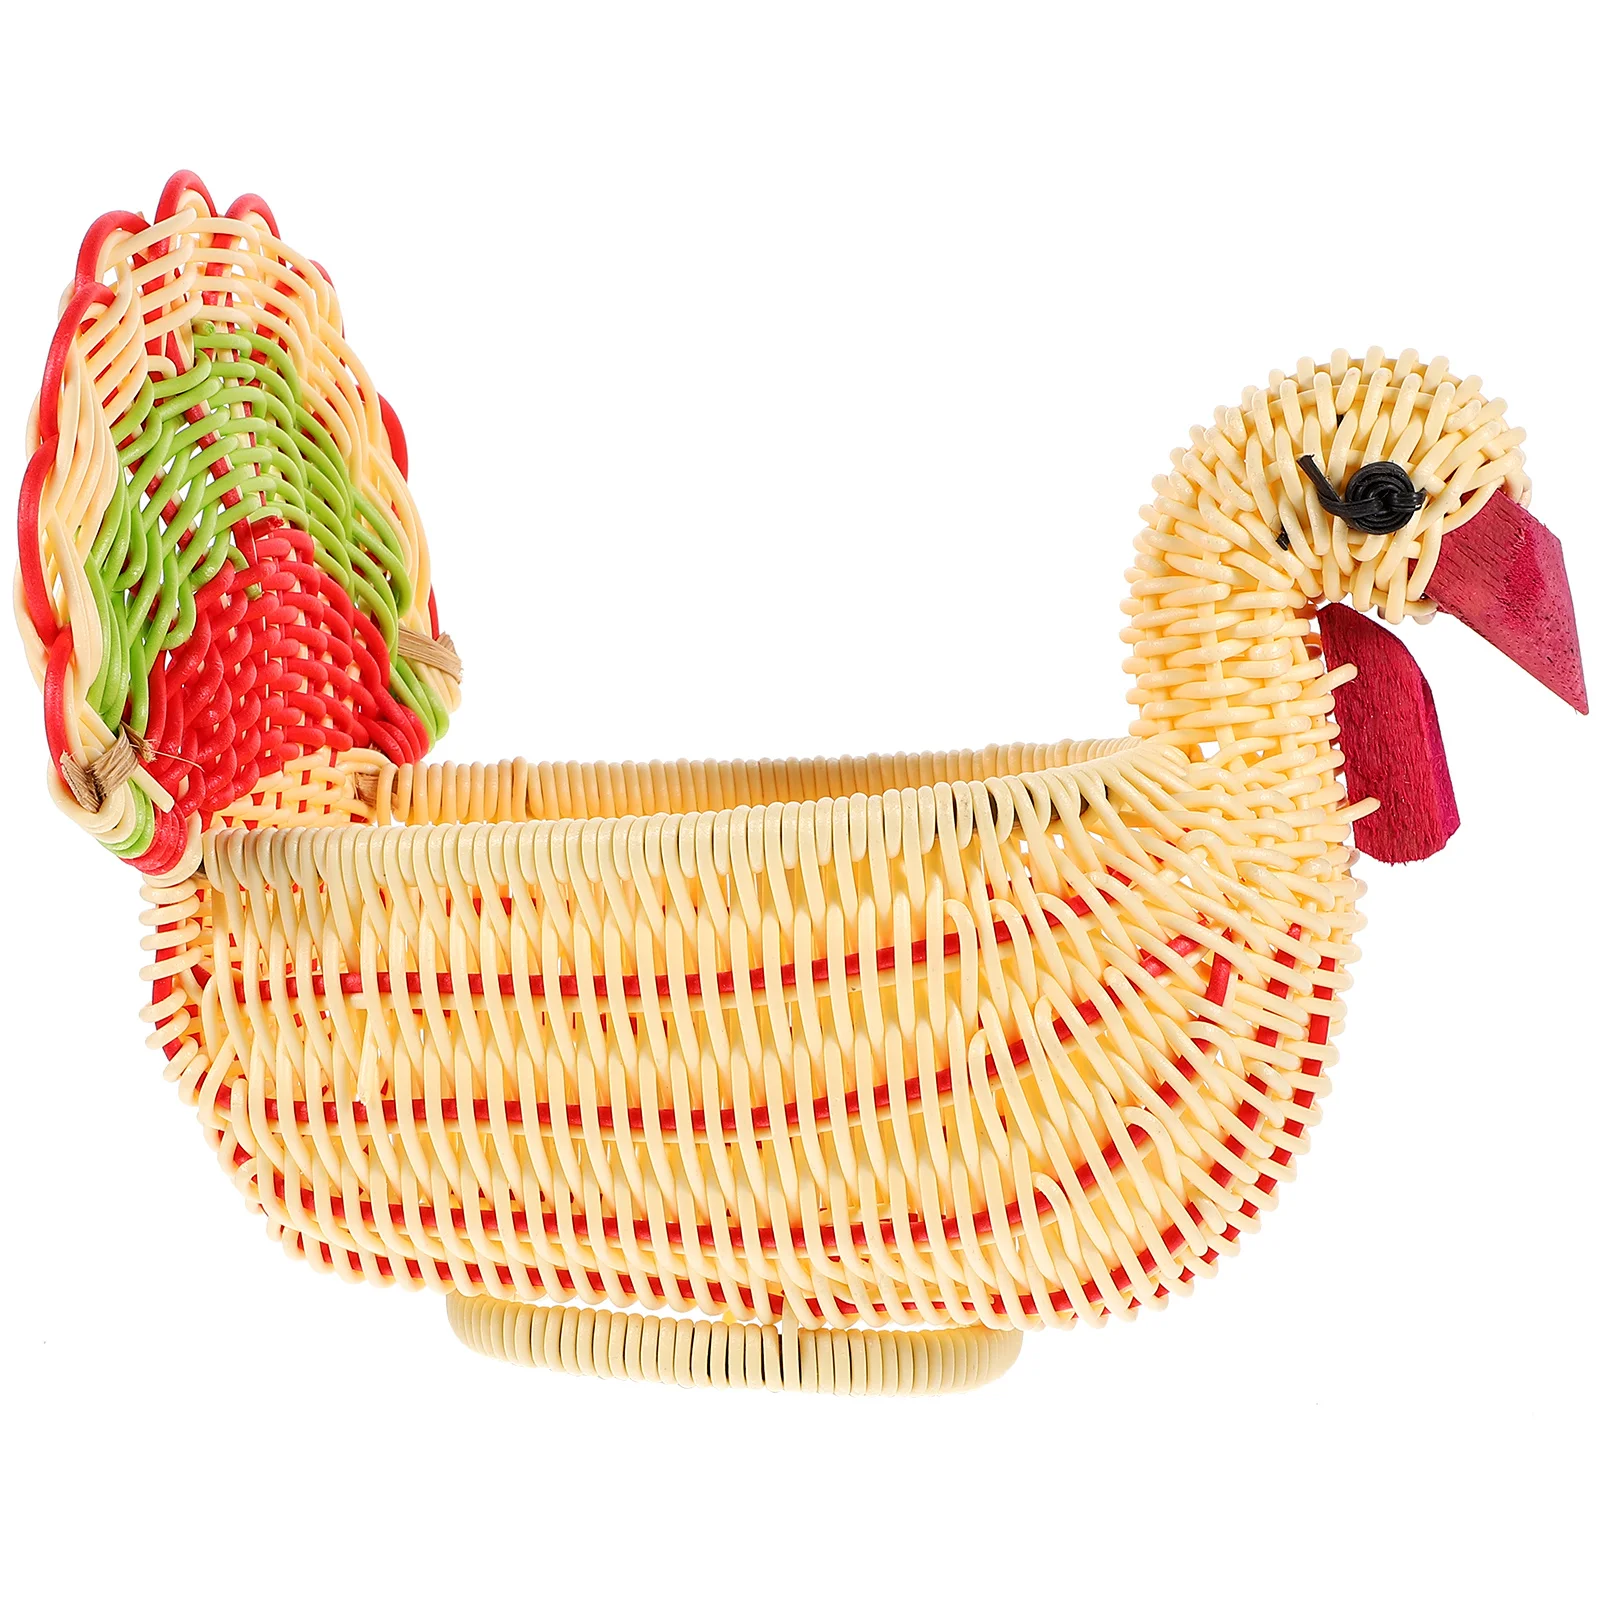 

Fruit Basket Snacks Bread Imitation Rattan Woven Storage Baskets For Pp Holder Household Desk Tray